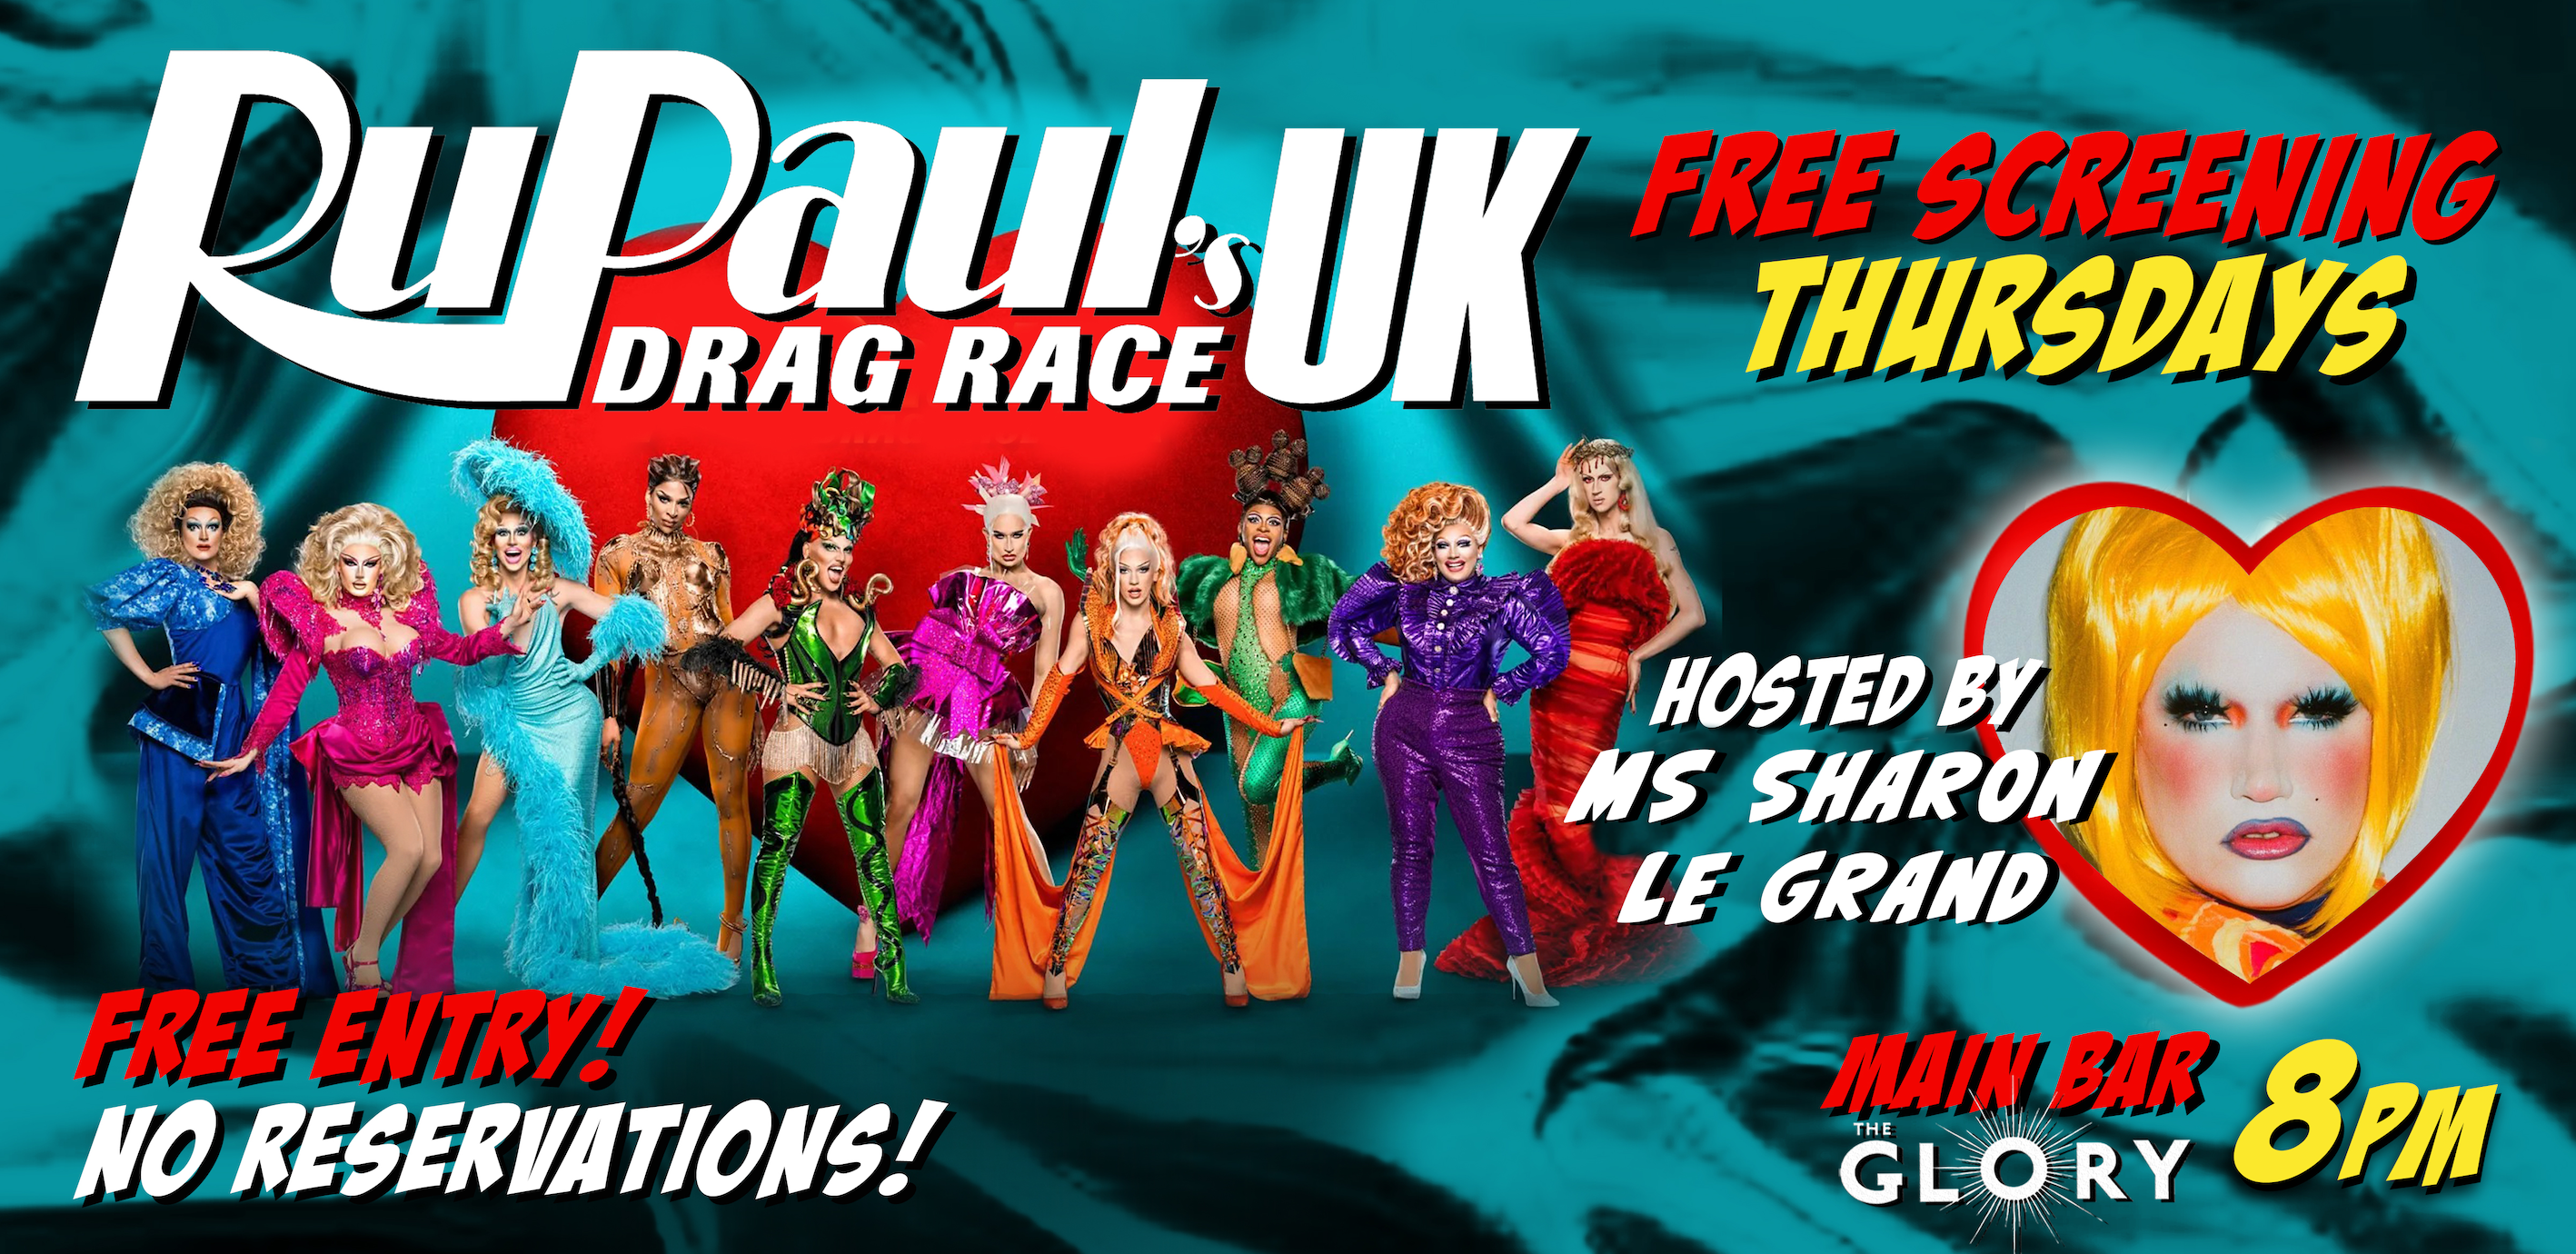 SCREENING: GRAND FINAL Ru Paul’s Drag Race UK Free Screening